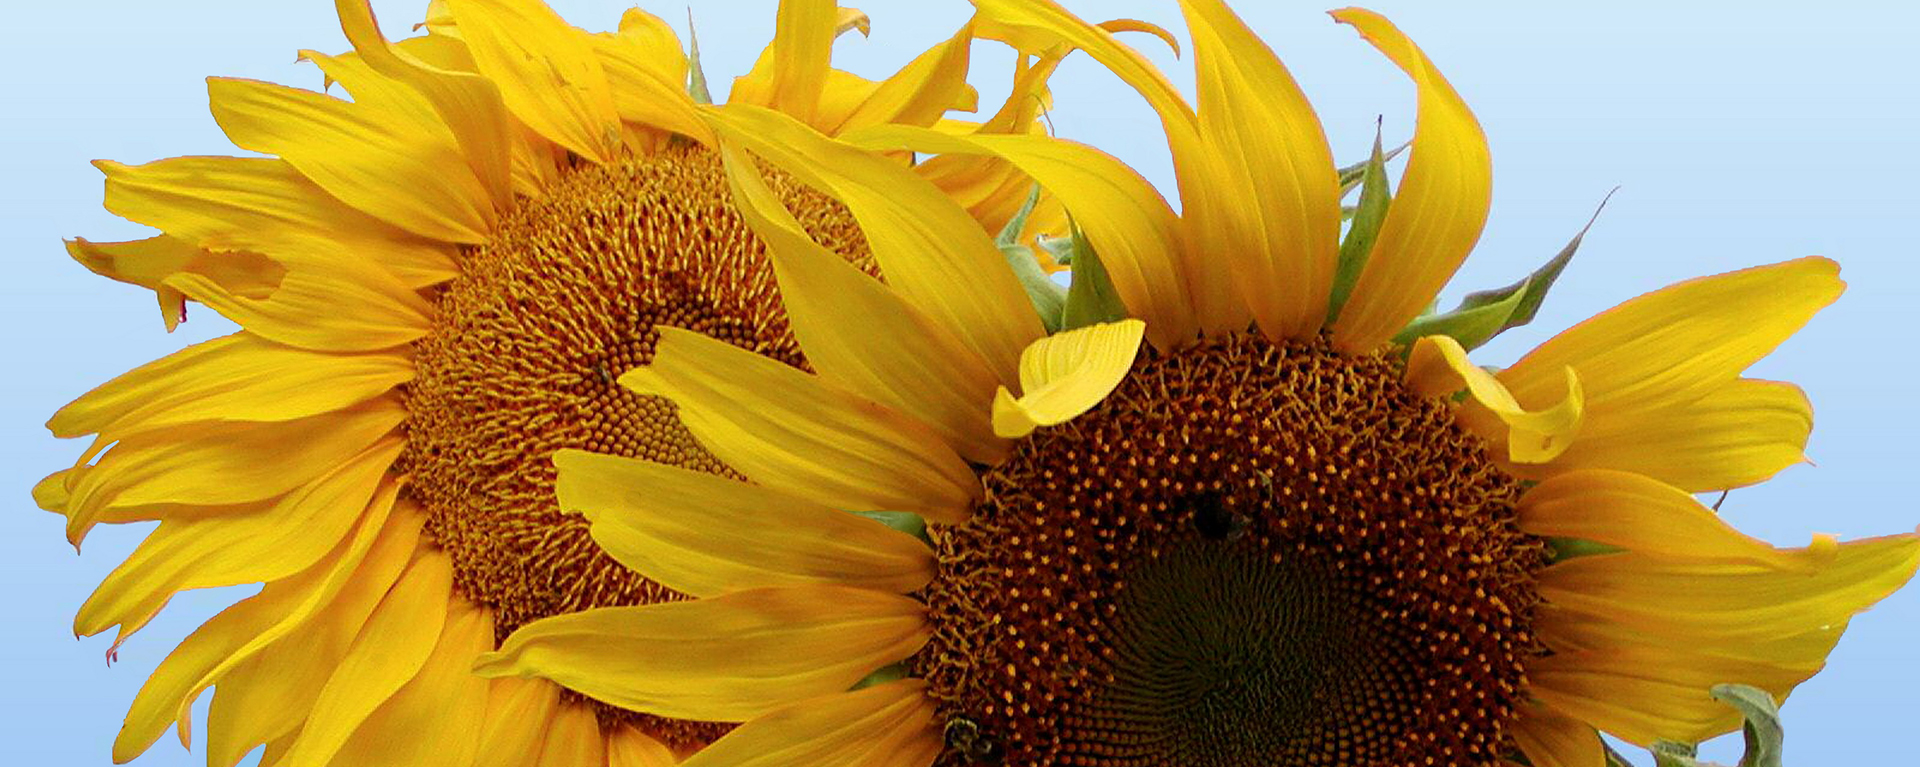 sunflowers closeup with blue sky